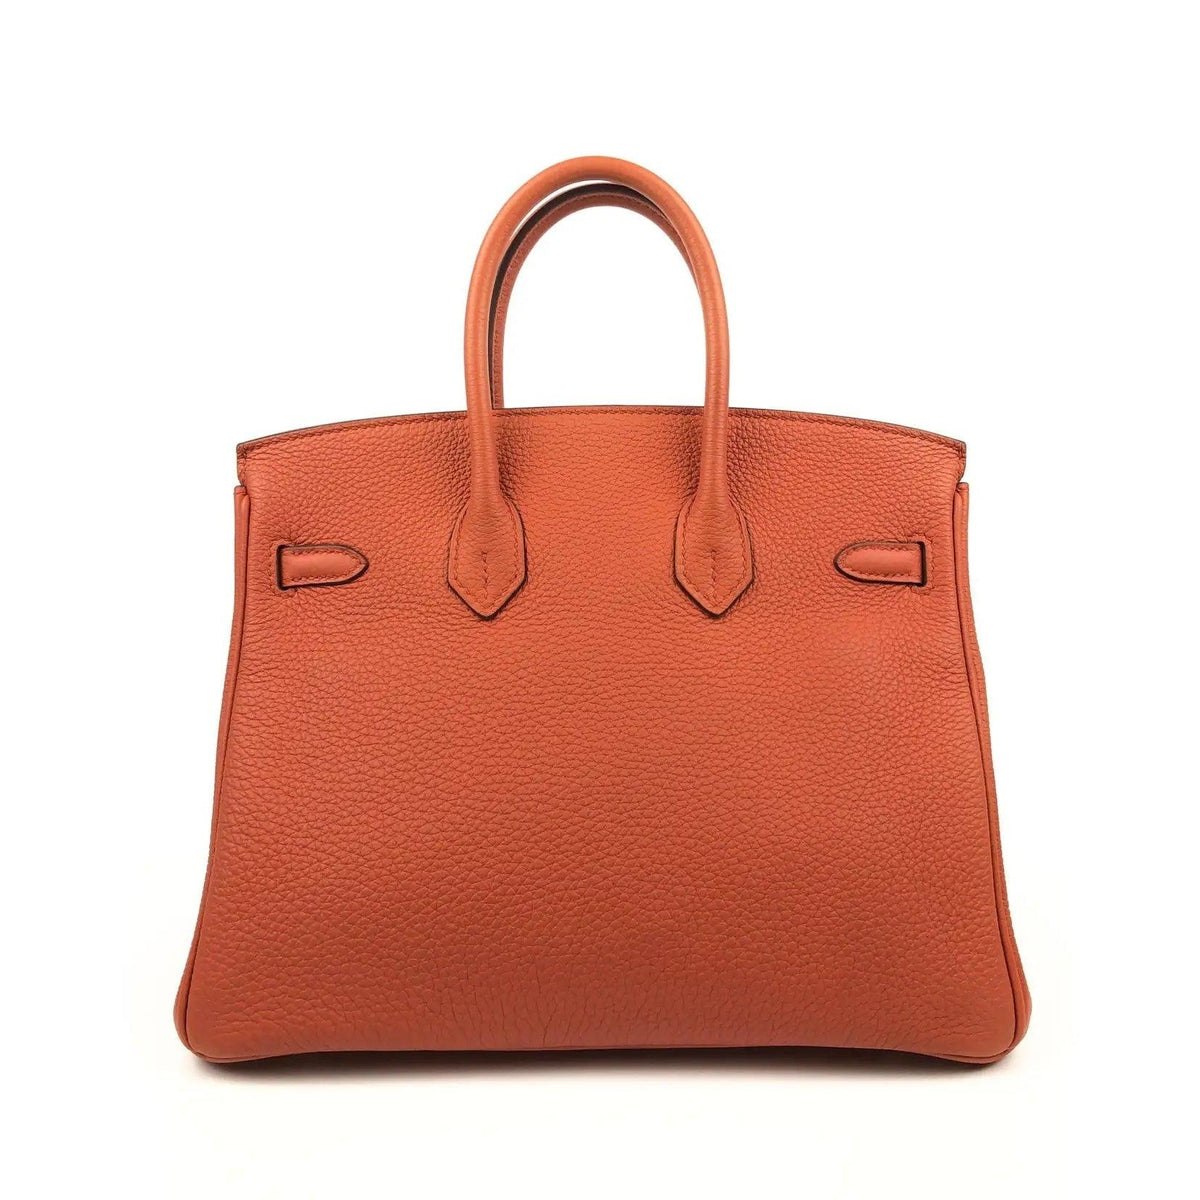 Pre-owned Rare HERMES Birkin 25 Terre Battue Orange Togo Leather Bag - theREMODA